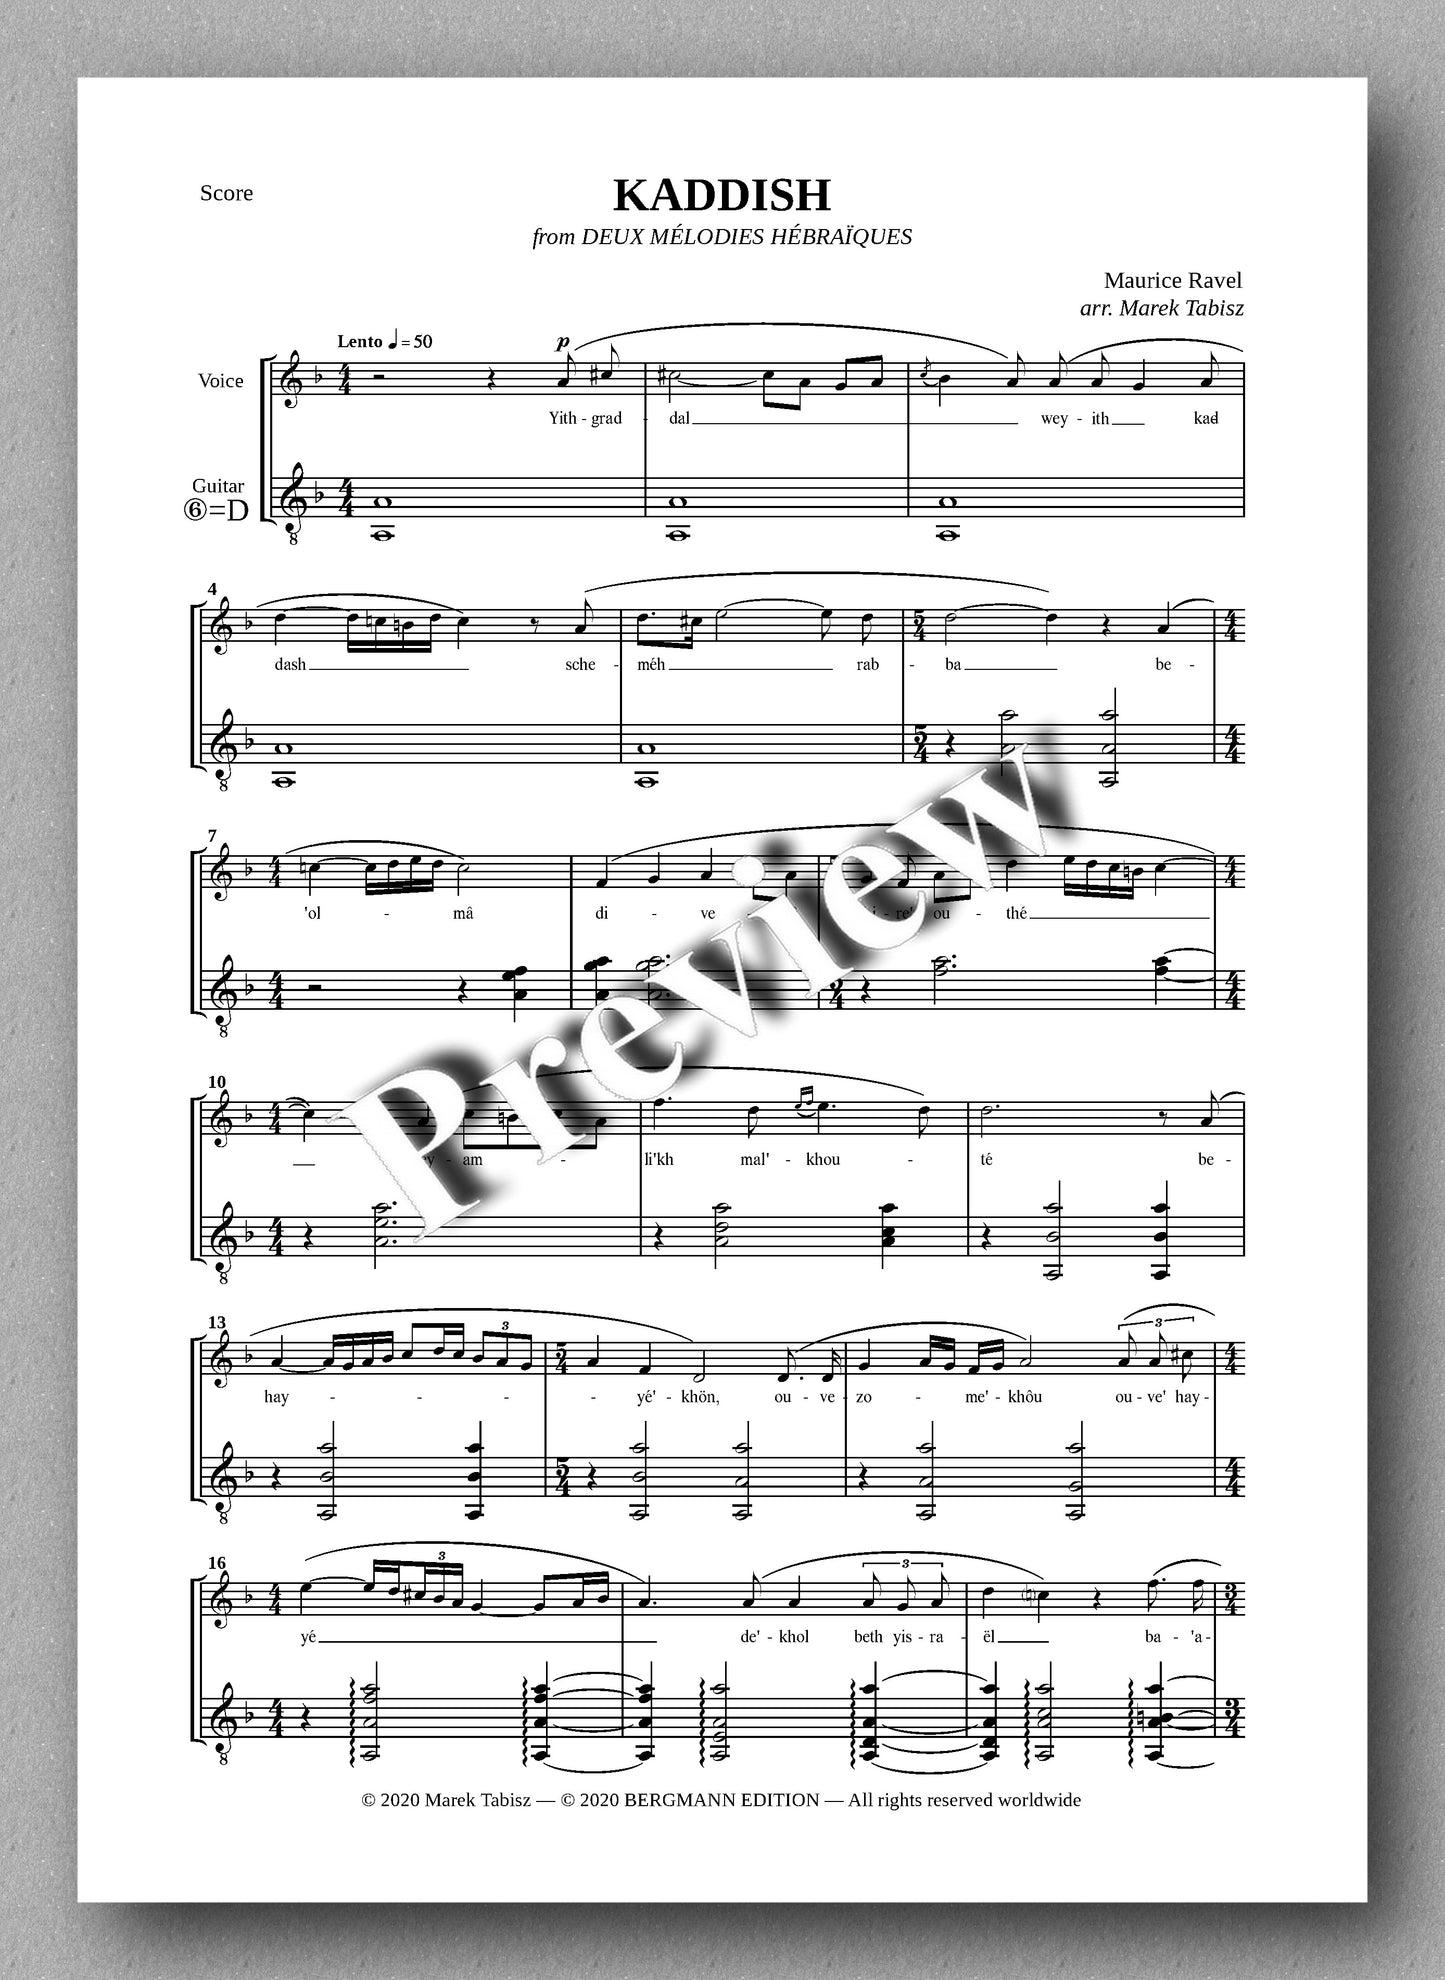 MAURICE RAVEL - KADDISH - preview of the Music score 1